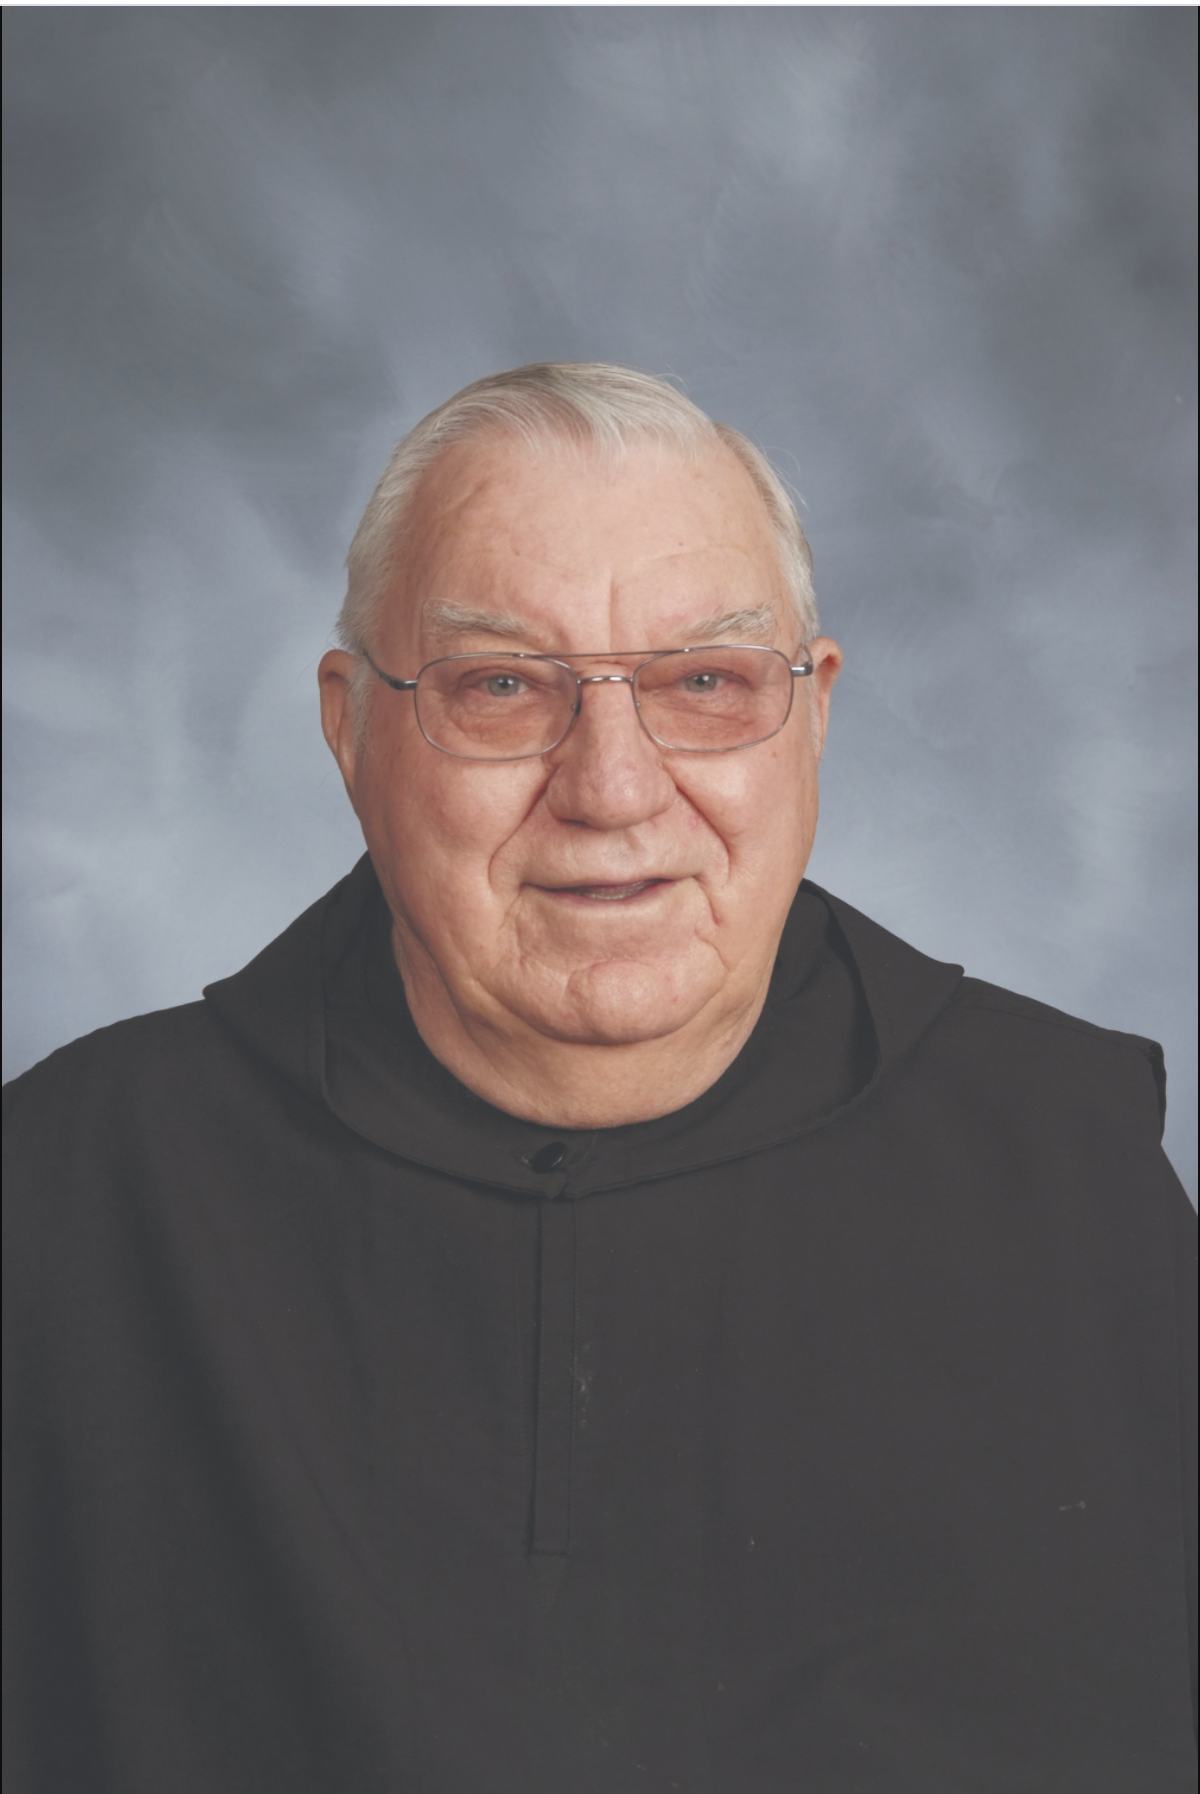  Father Ambrose Hessling - 01/02/31 - 12/31/16